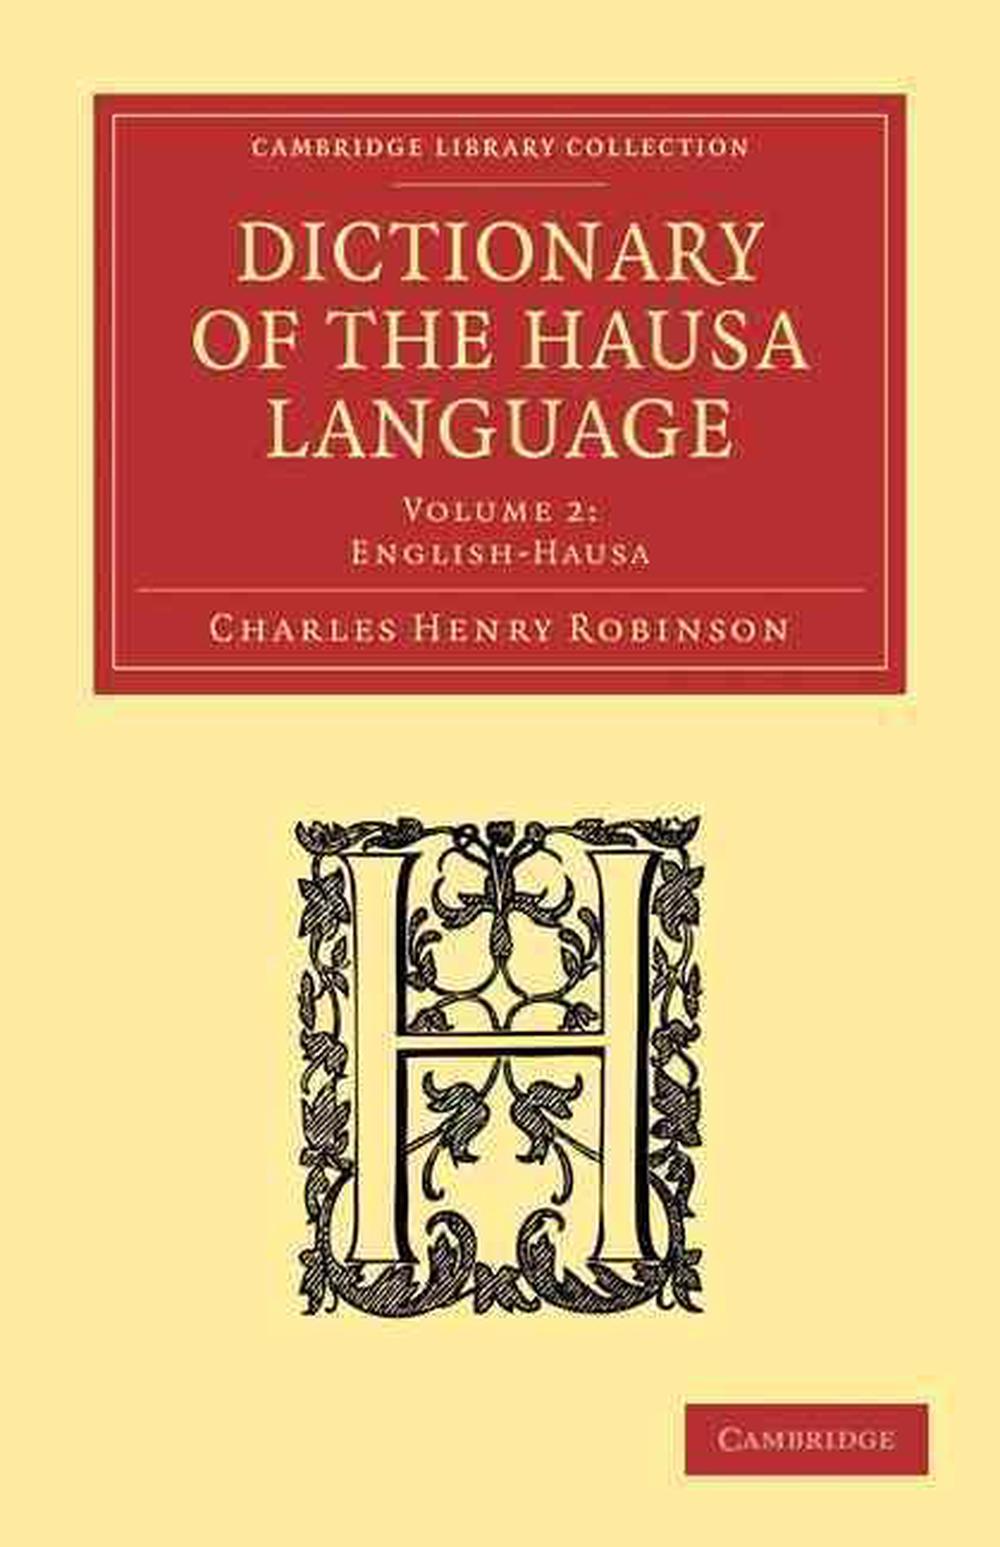 Collection dictionary. Hausa language. Хауса язык. Учебник языка хауса. The Random House Dictionary of the English language (1973).